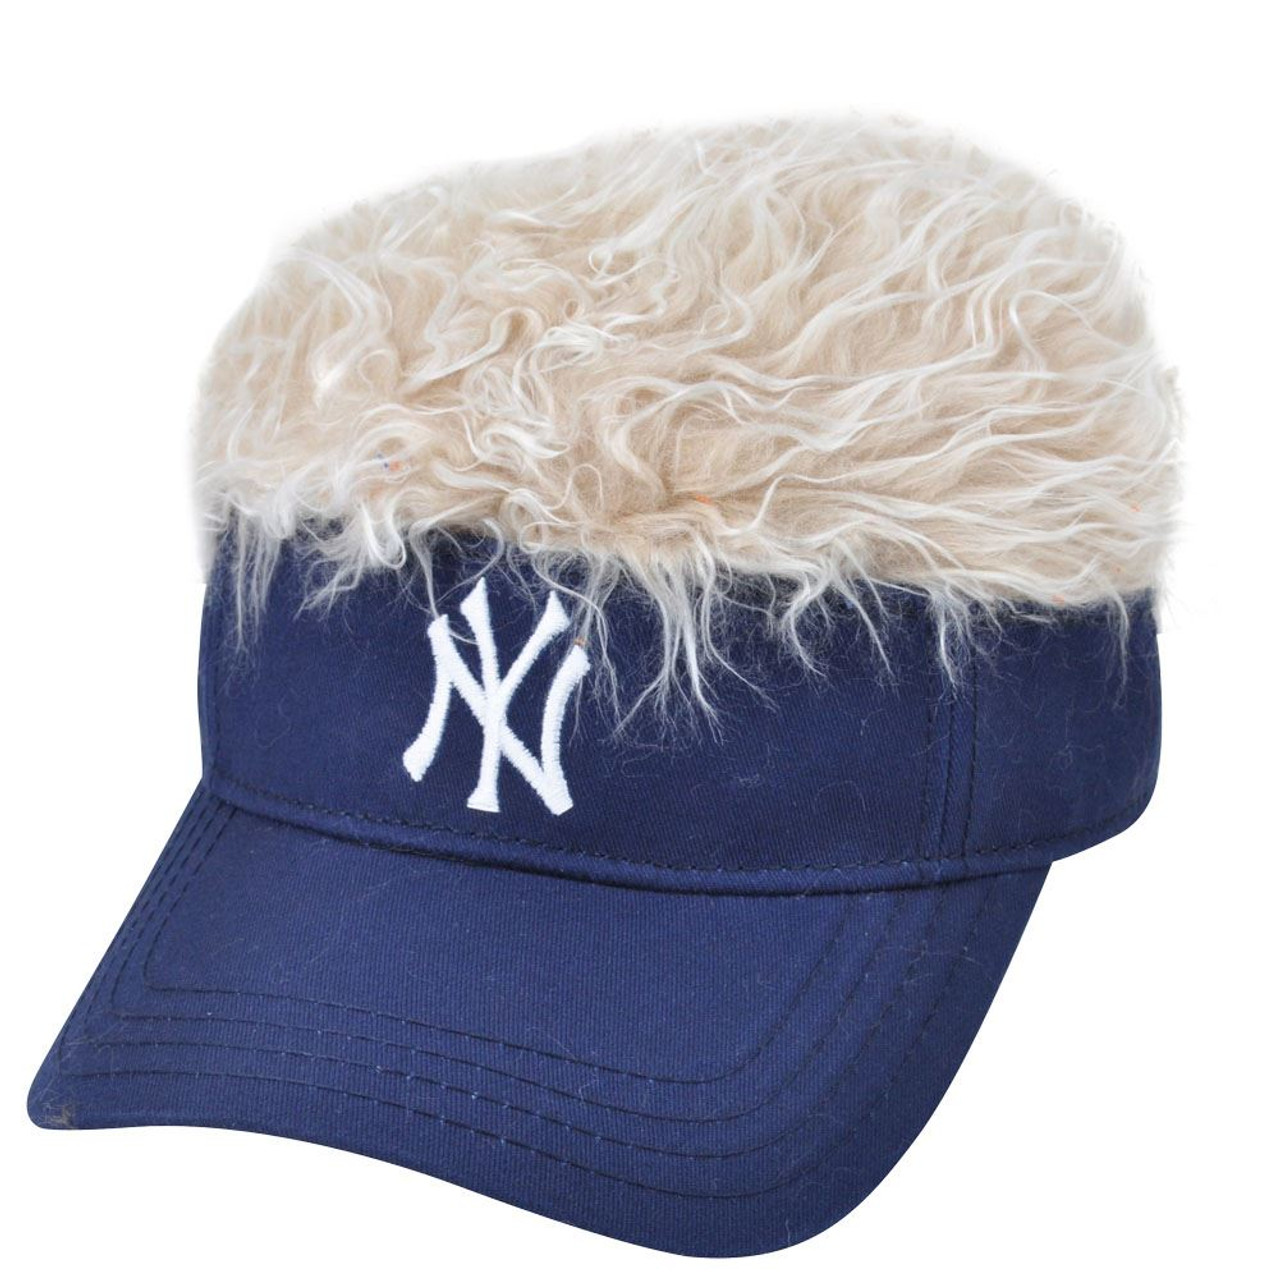 Hat York Velcro Blonde Flair Visor Cap Fan MLB Yankees Creed NY Hair - Store New Adjustable